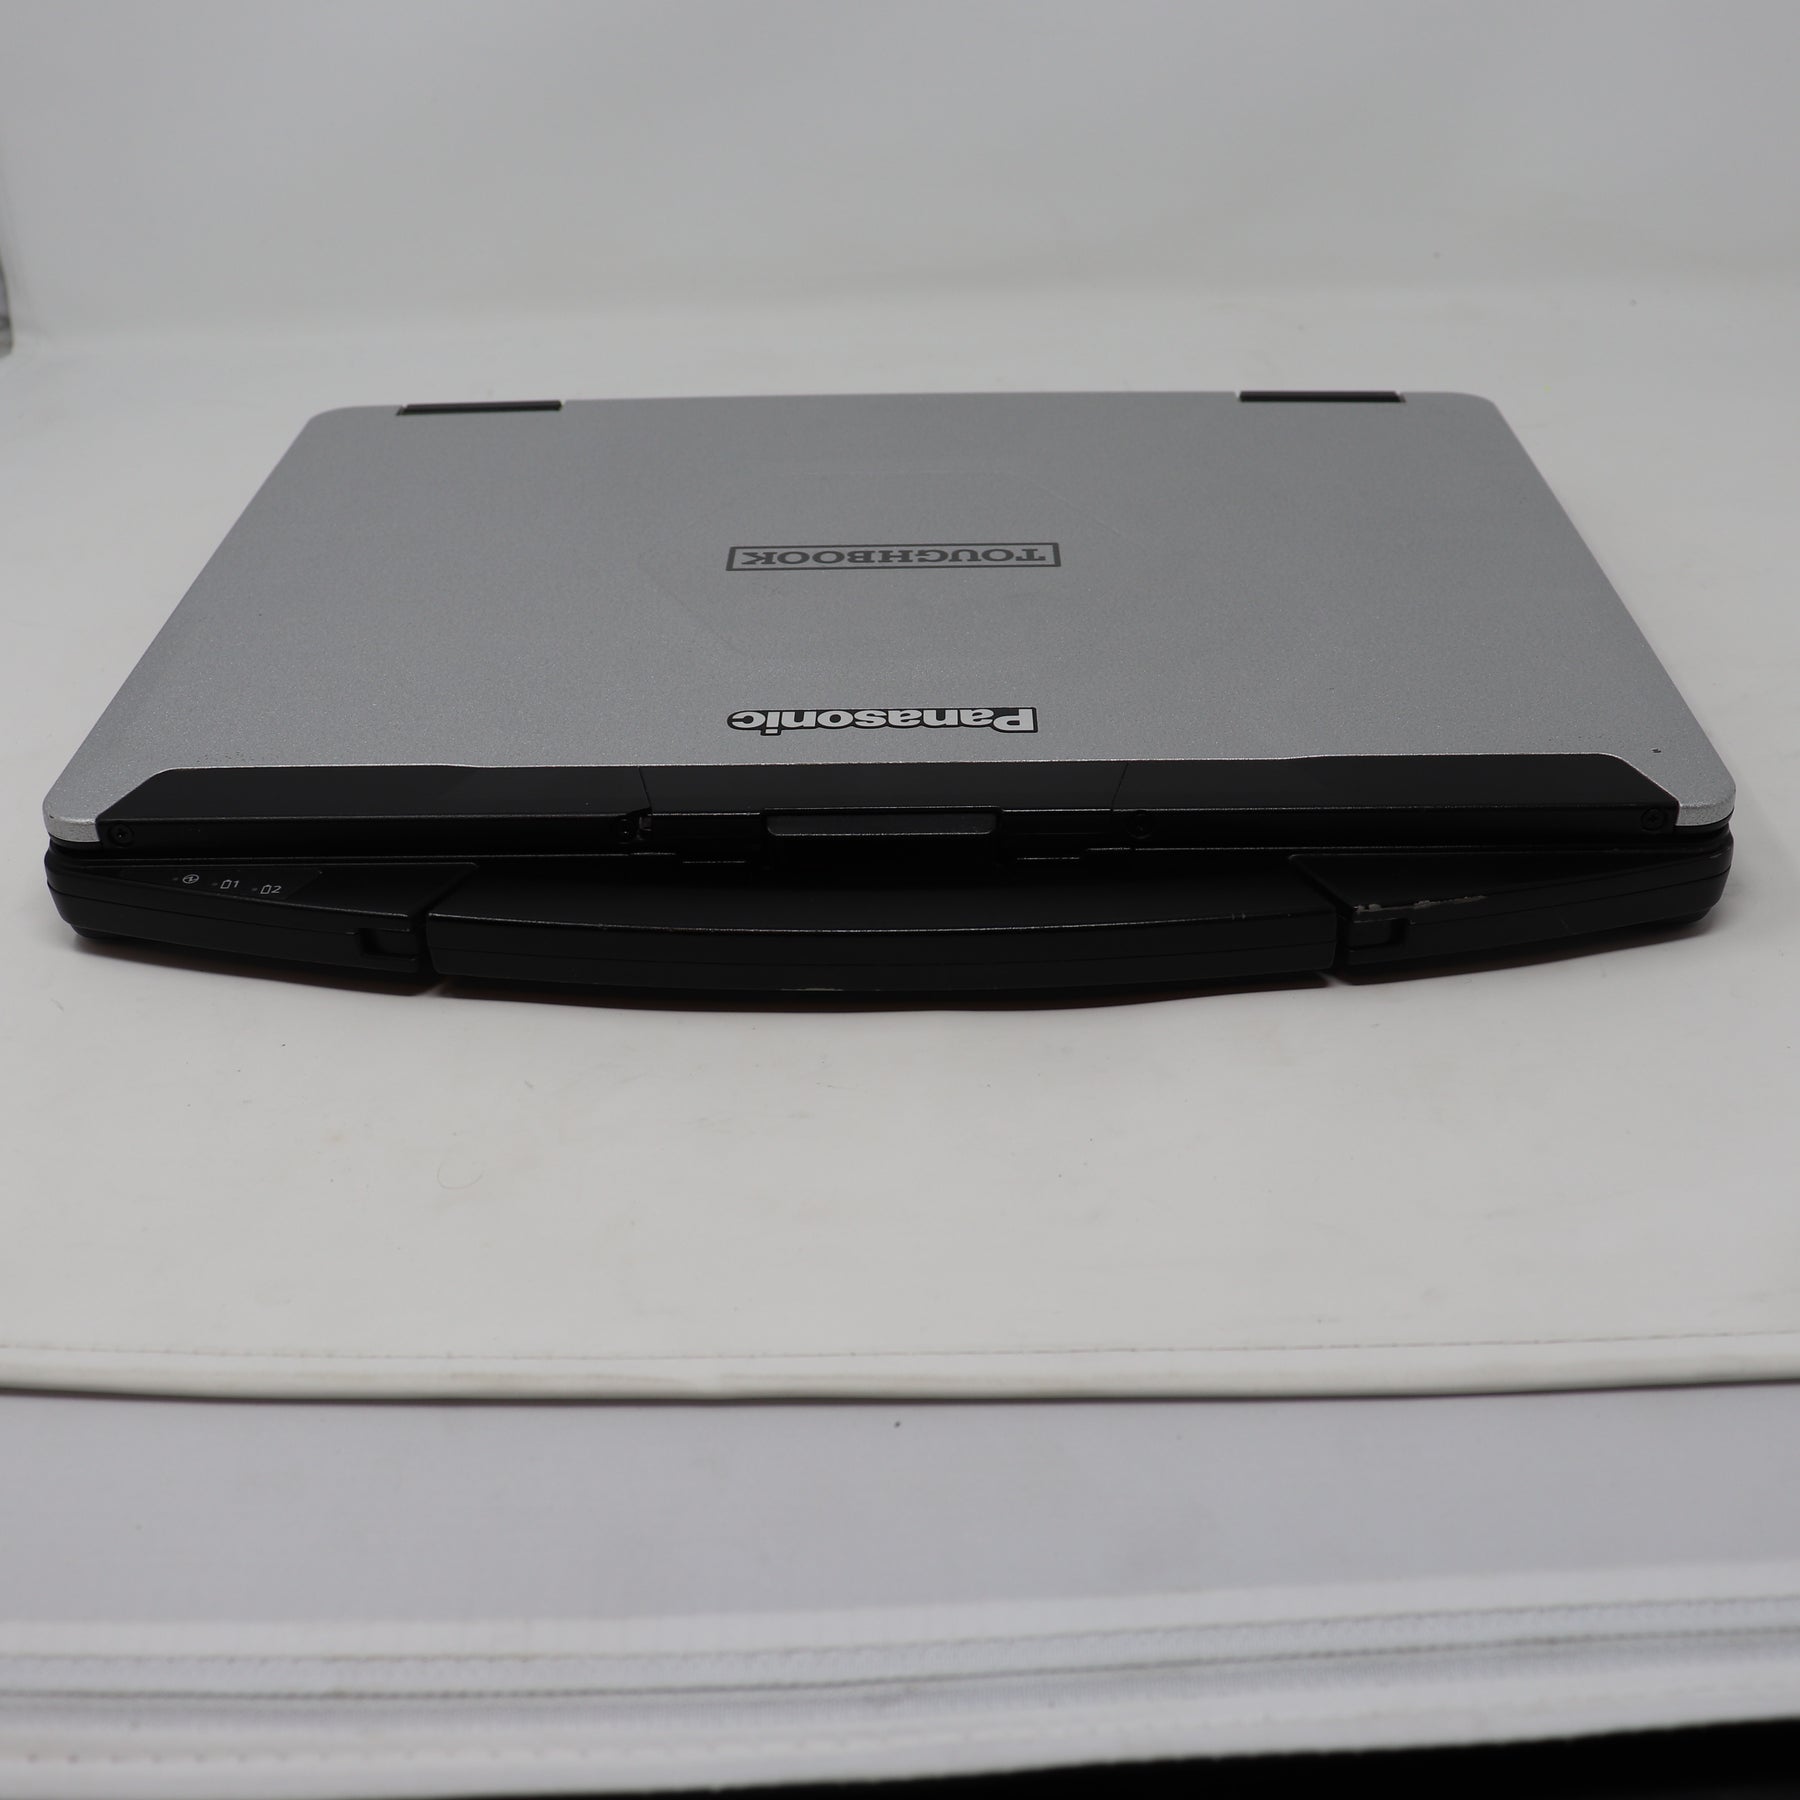 Panasonic Toughbook CF 54 MK1 Touchscreen i5 8GB 1TB SSD Rugged Laptop